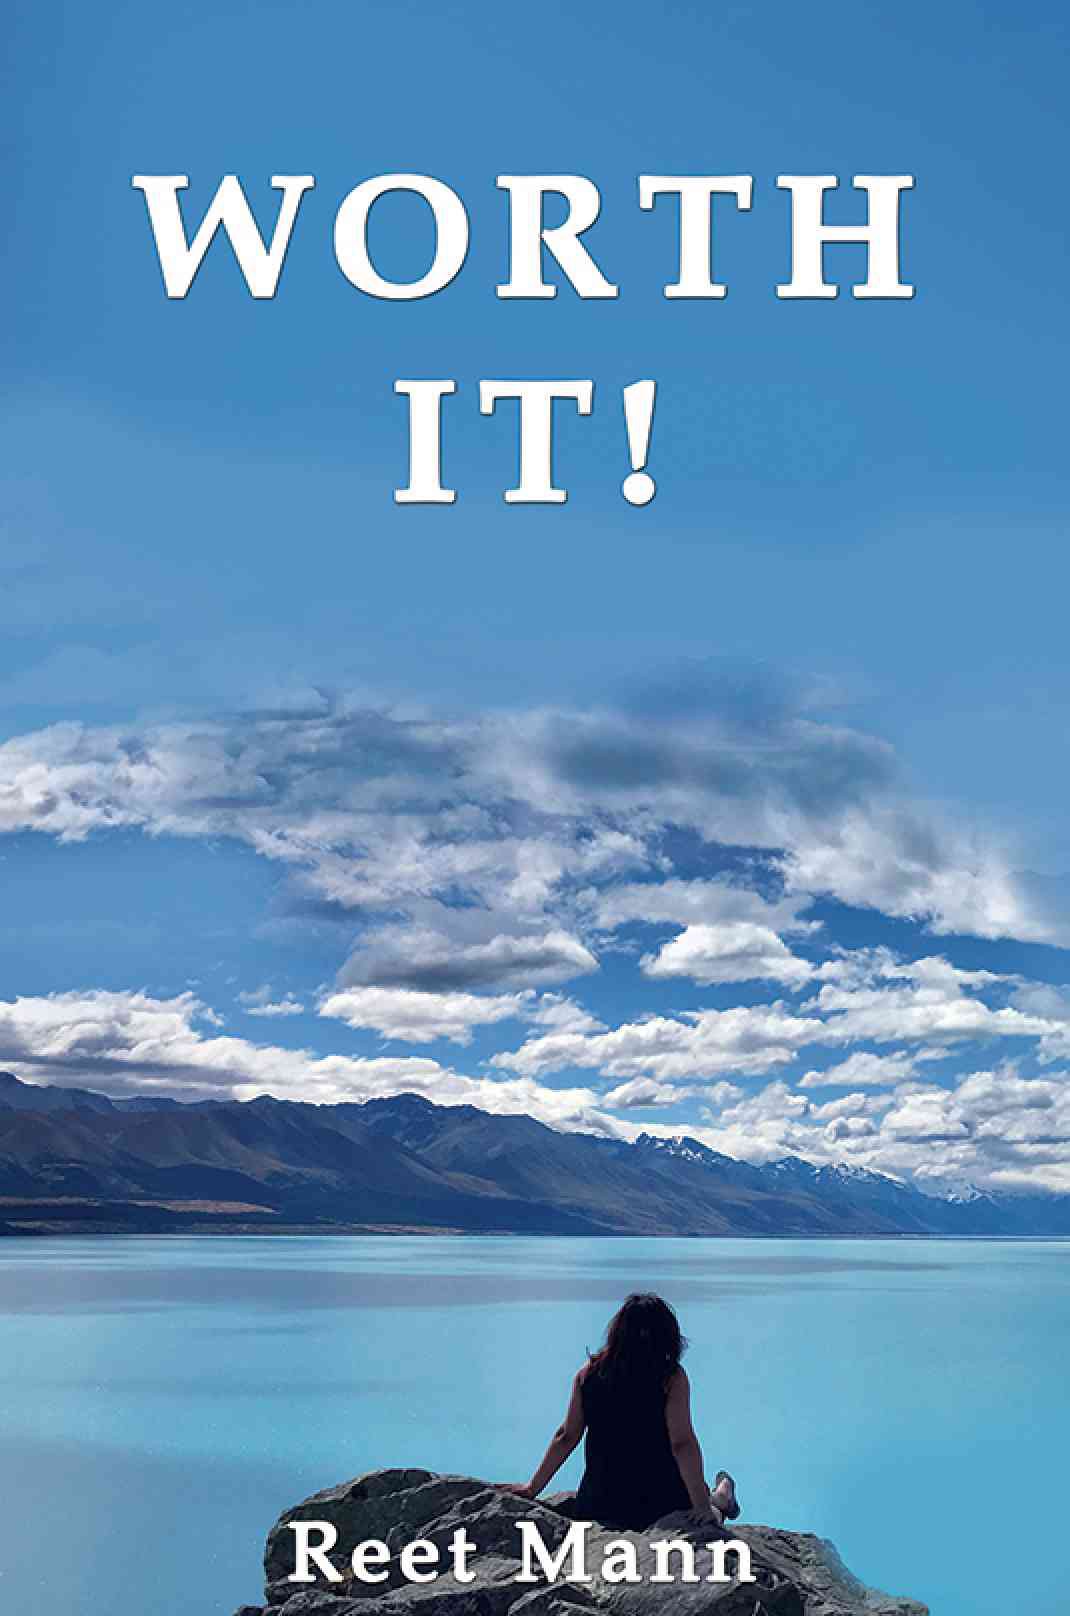 ‘Worth It!’ by Reet Mann Reviewed by Dr. Joe Vitale